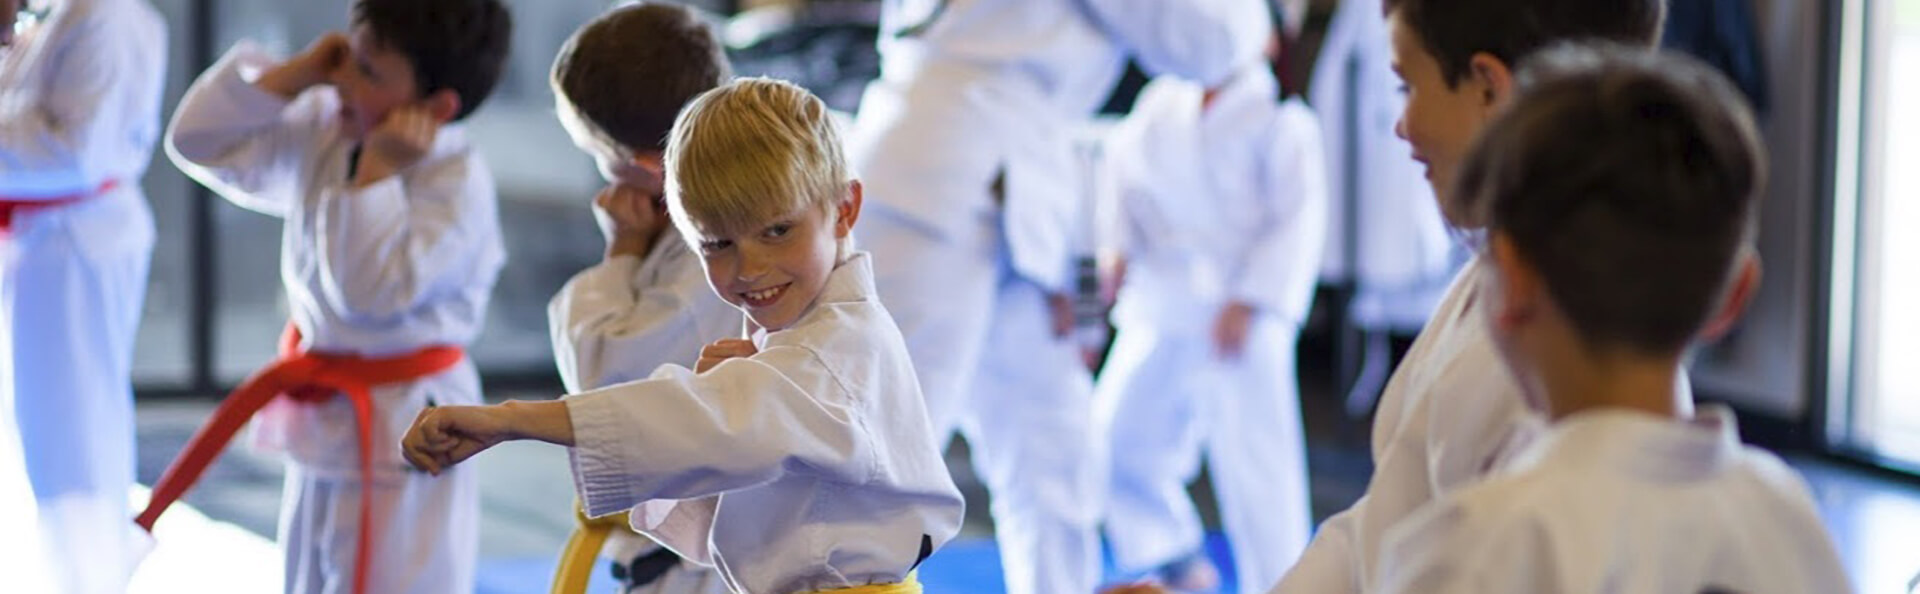 Карате Медведково - картинка karate-kid-baner-1.jpg